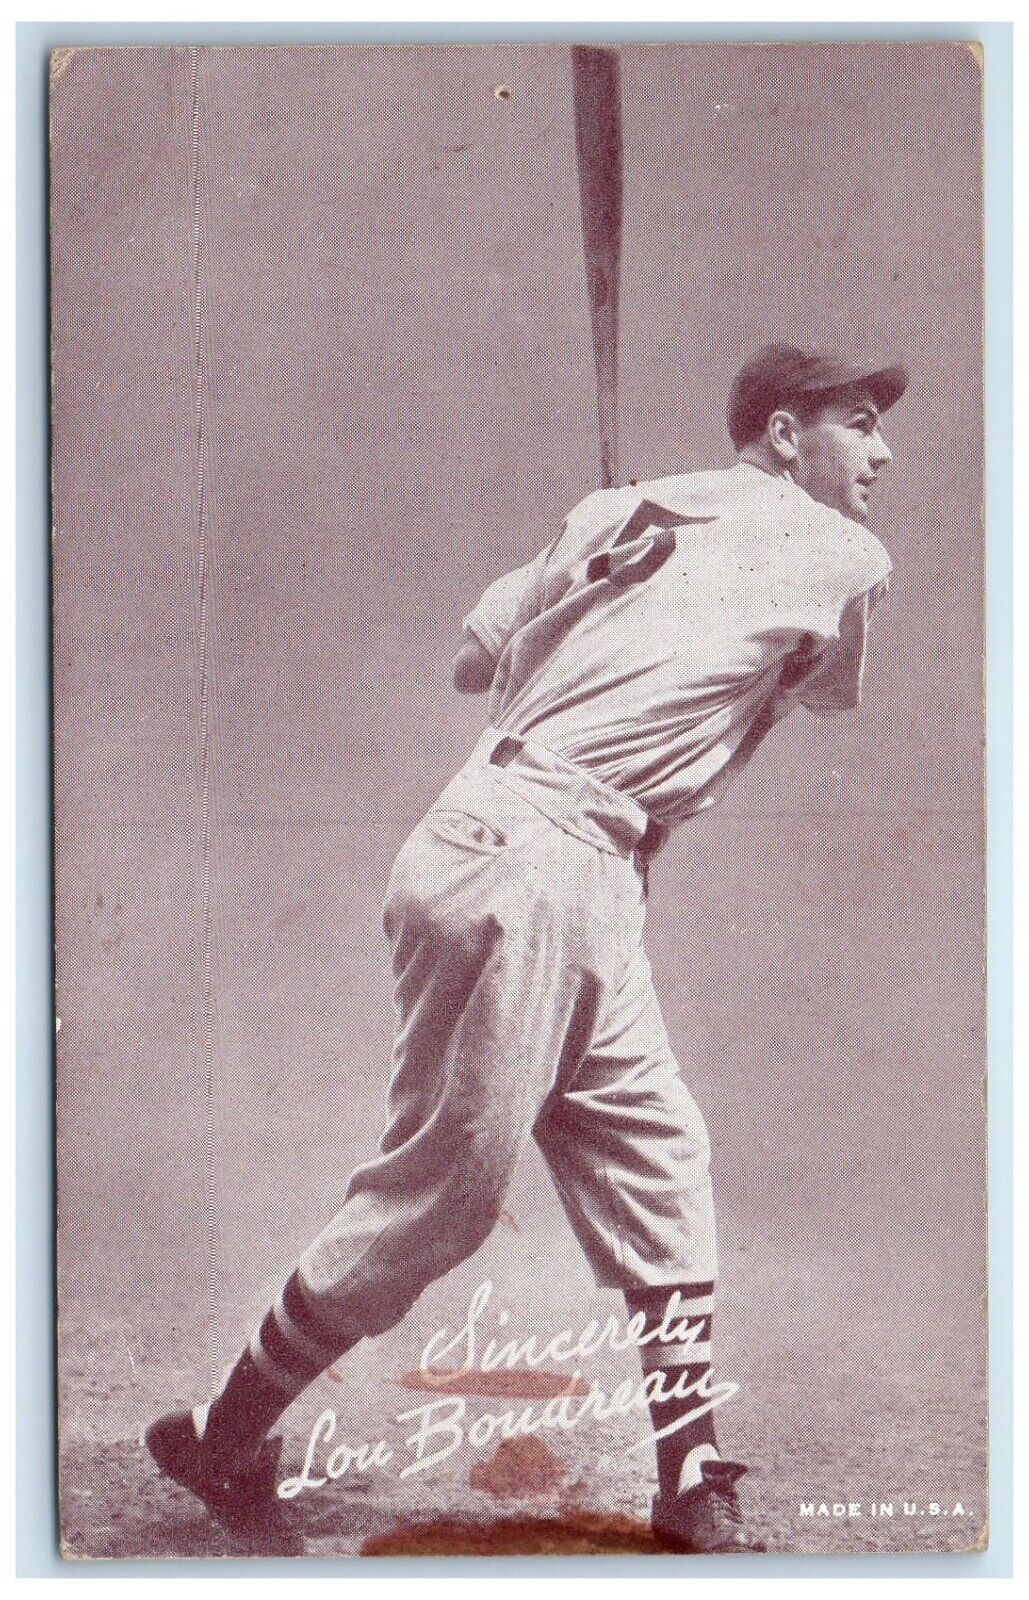 c1950's Sincerely Lou Boudreau Baseball Player Sports Exhibit Arcade Card